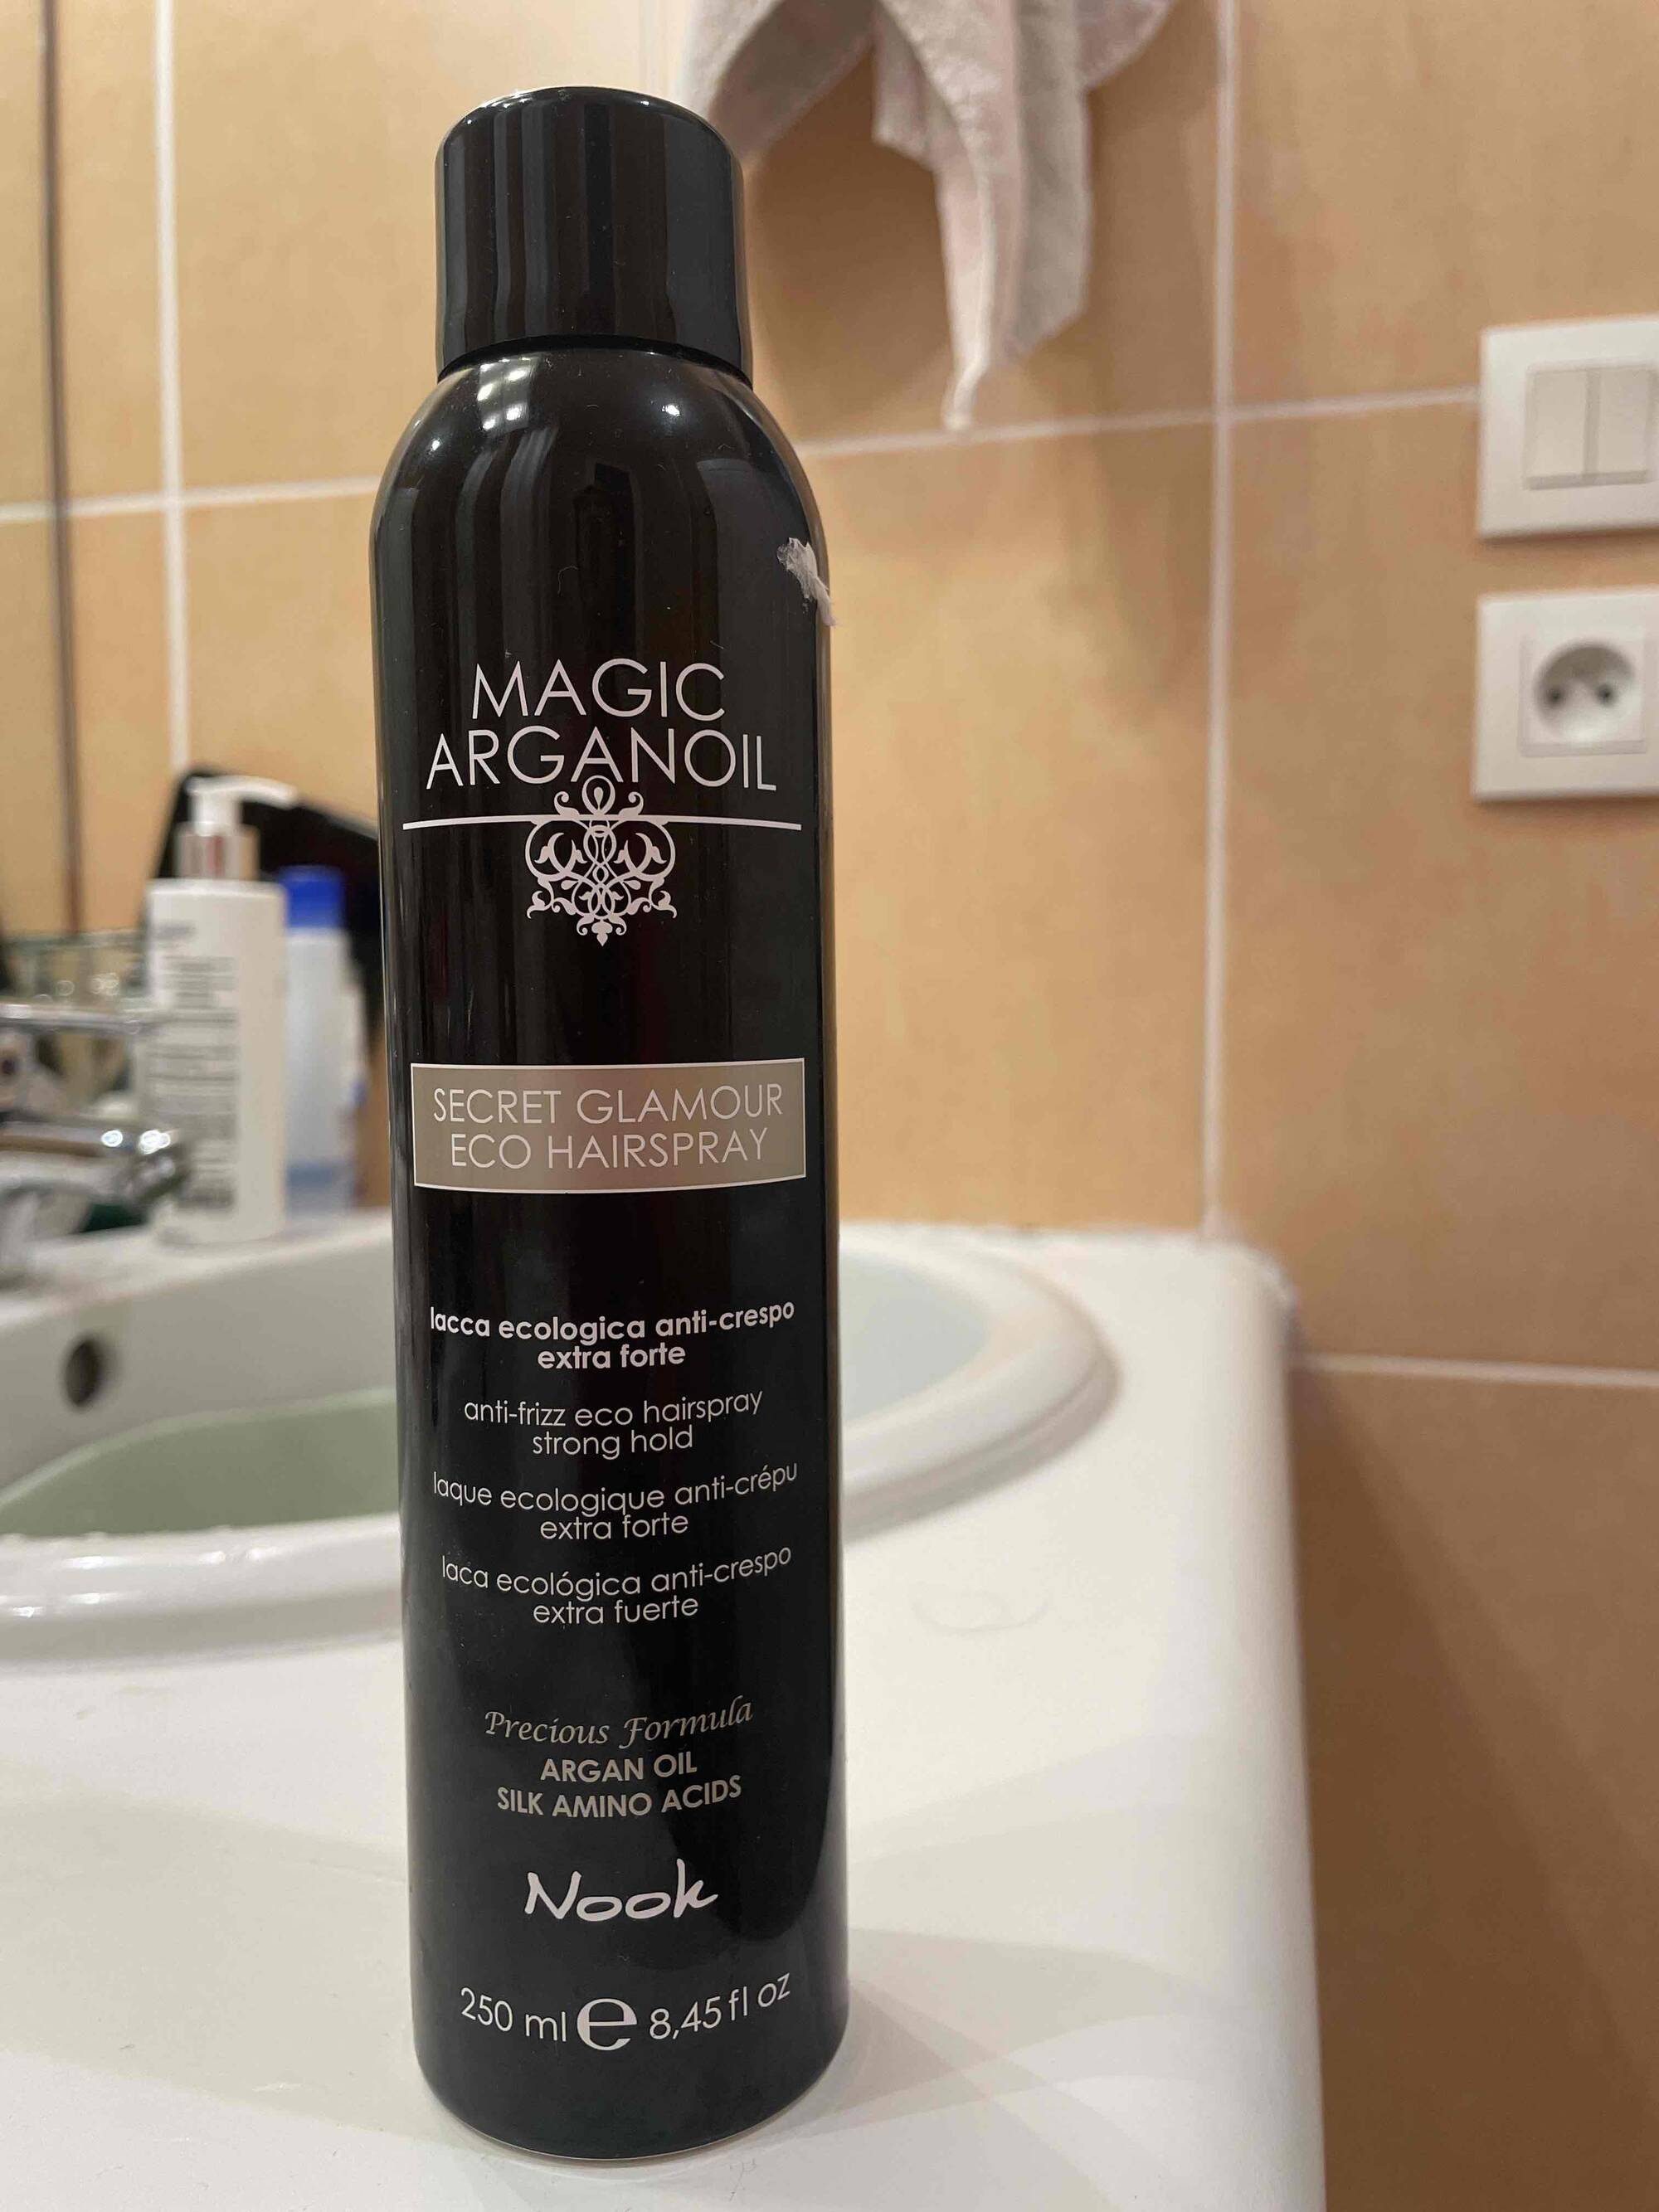 NOOK - Magic argan oil - Secret glamour eco hairspray